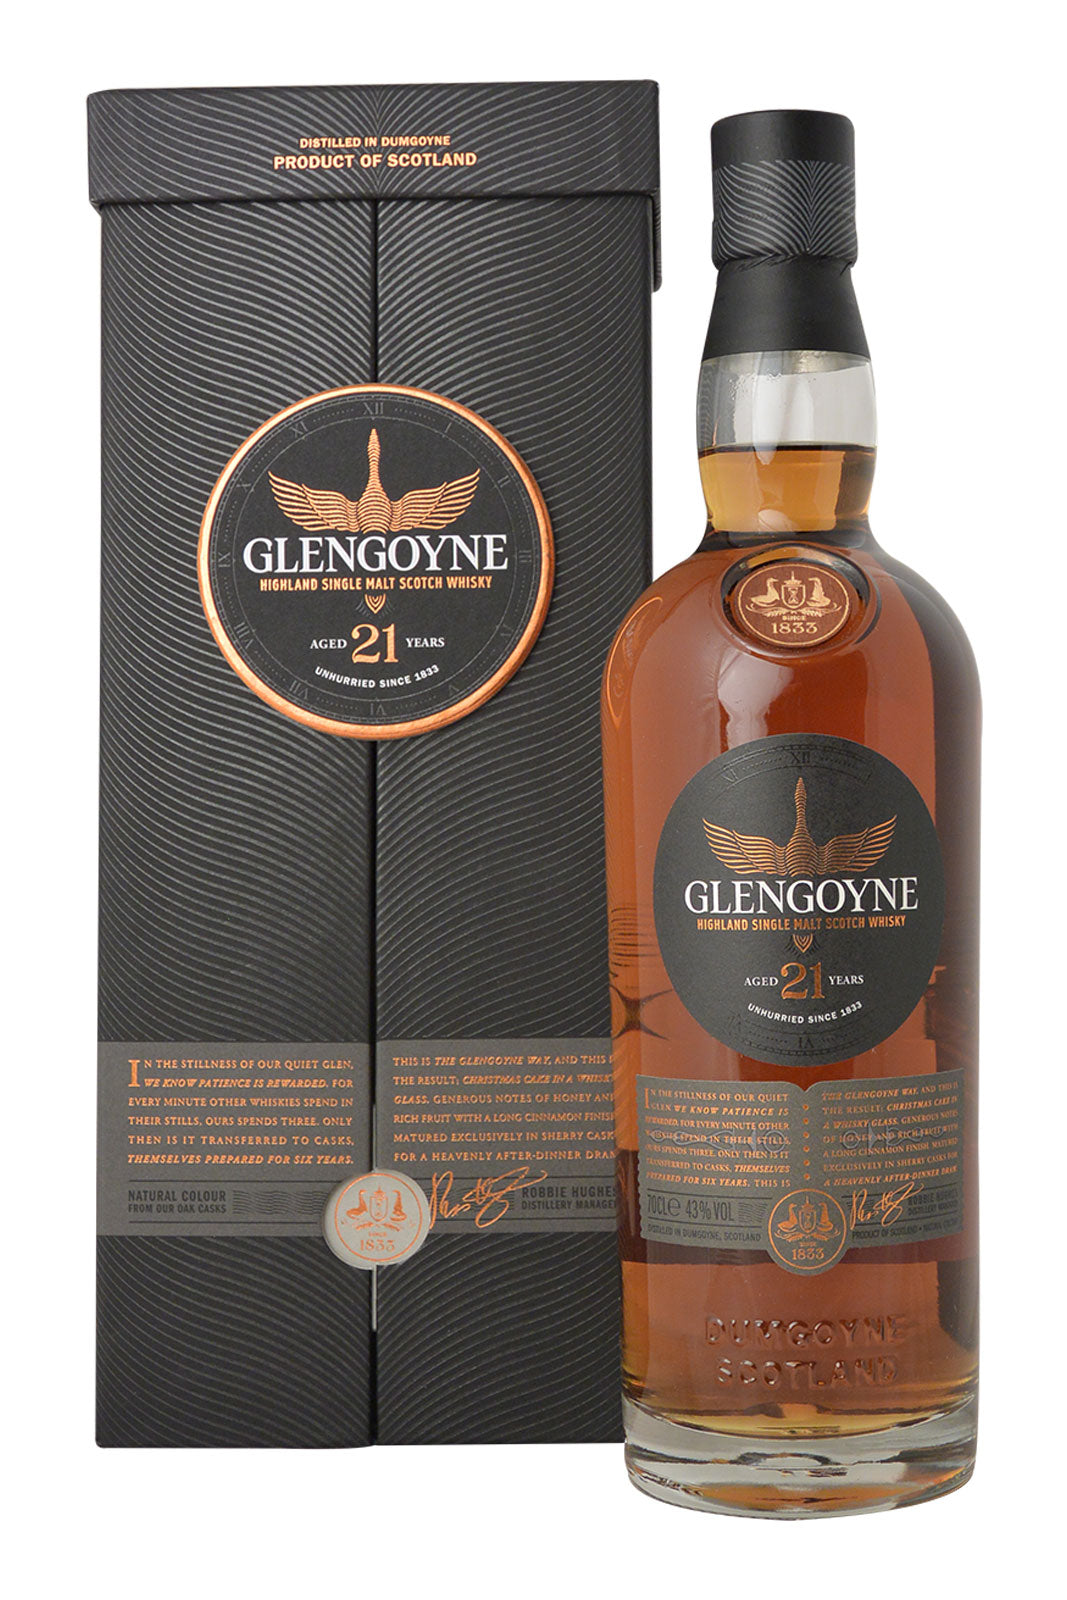 Glengoyne 21 Year Old - Unhurried Since 1833